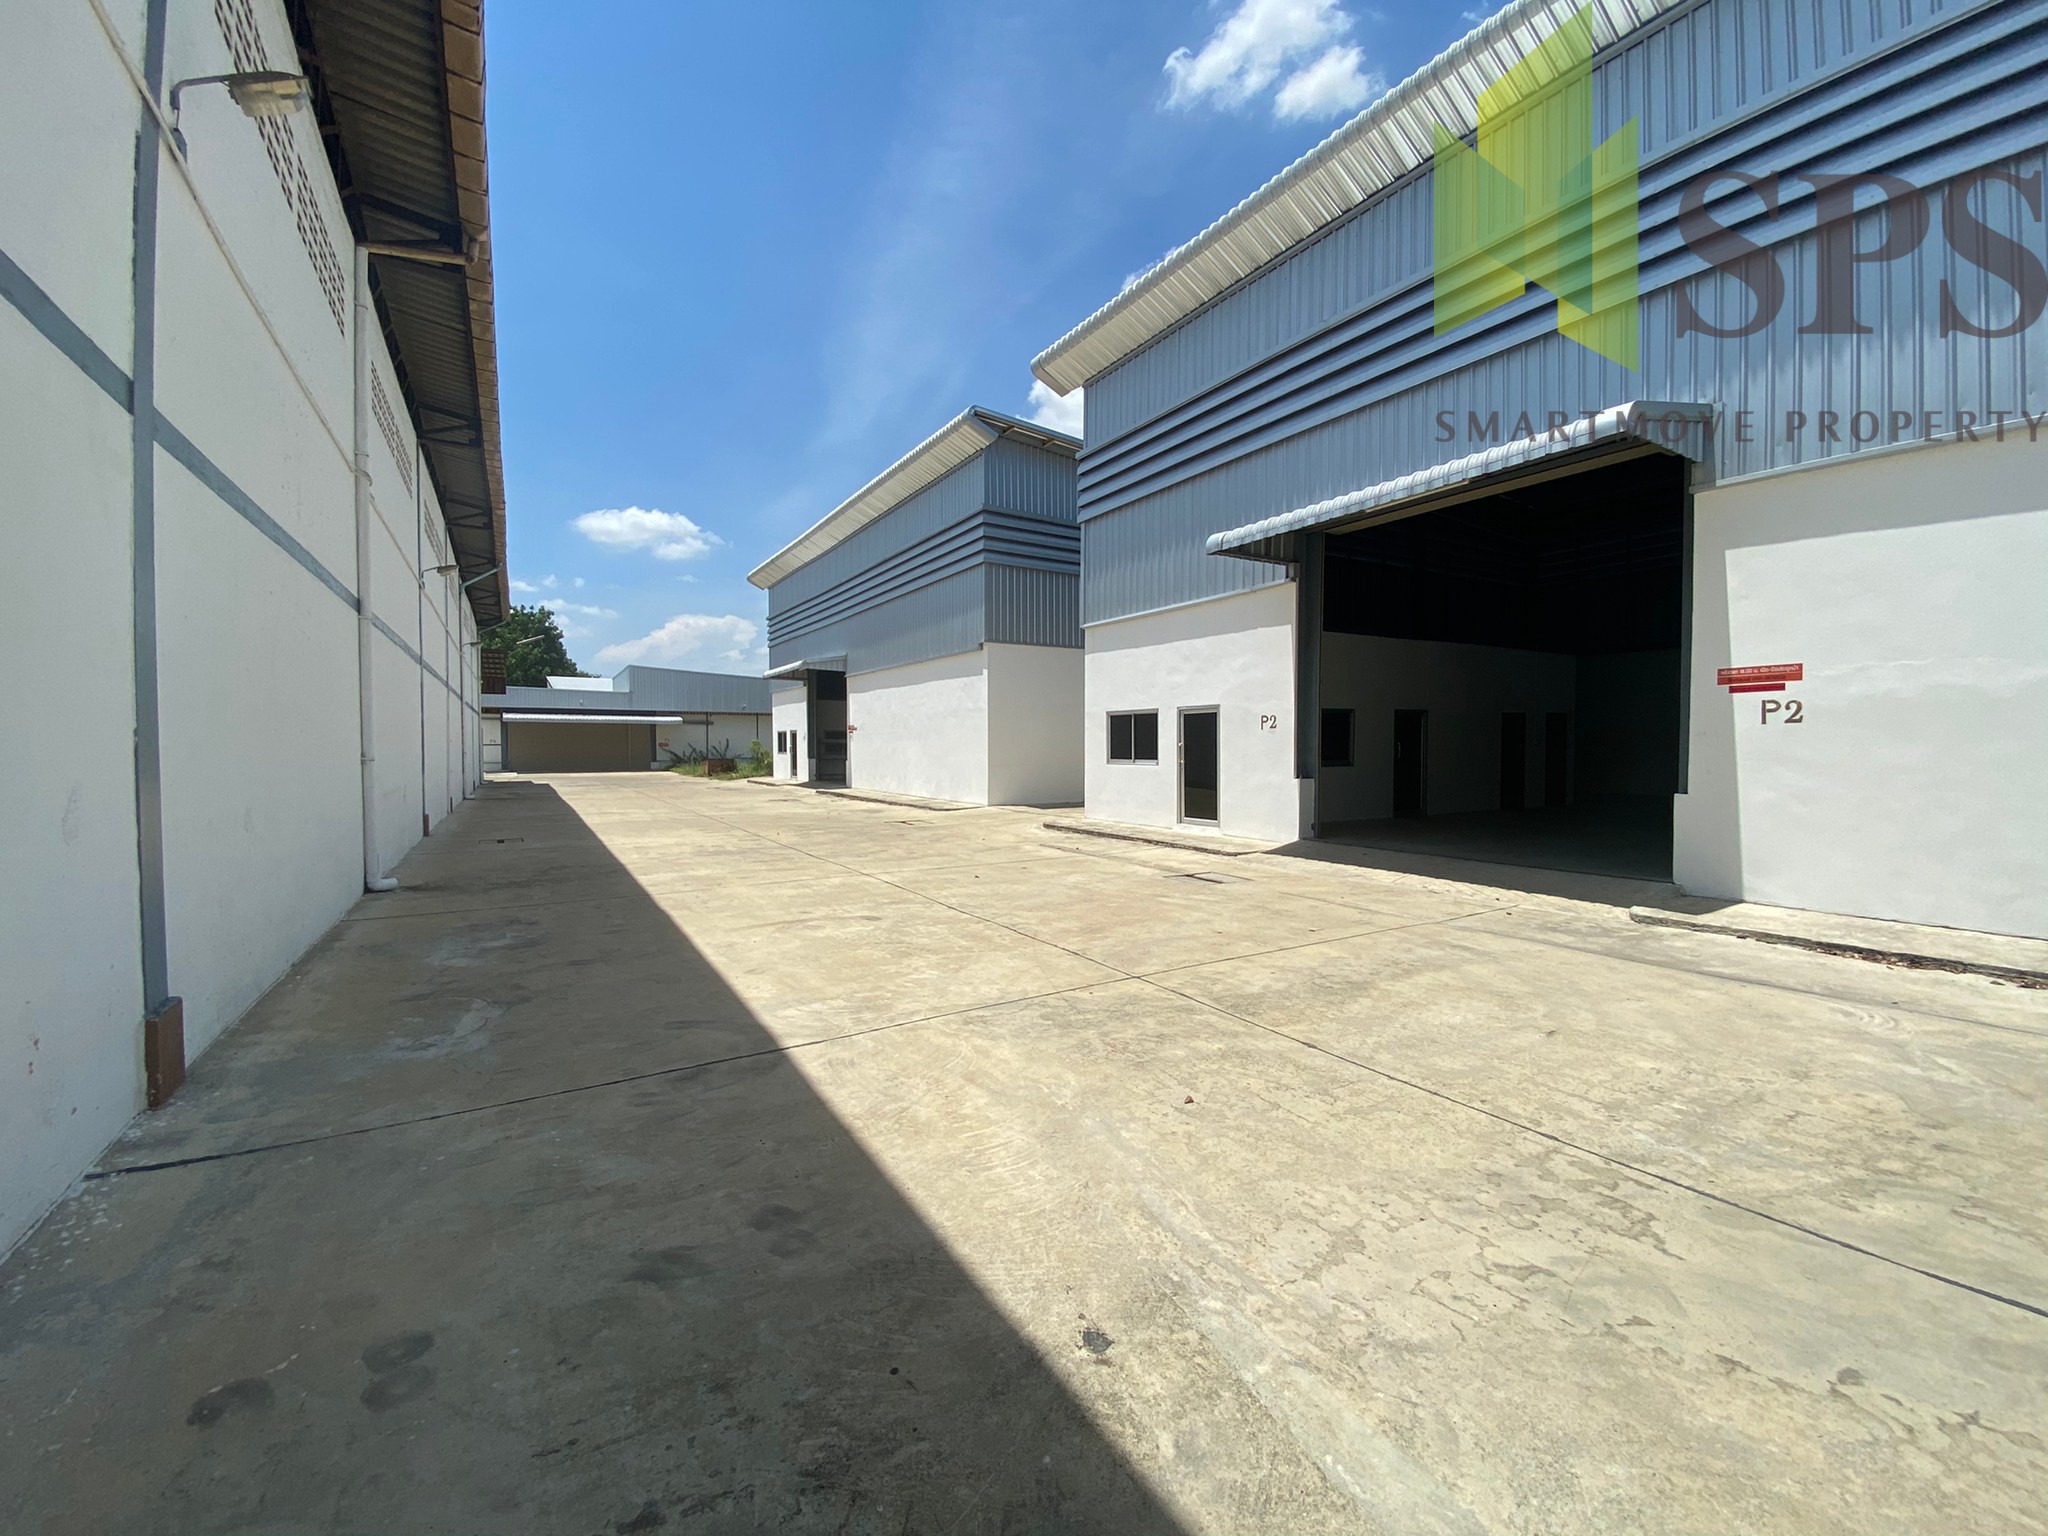 Factory/Warehouse with Office for RENT in Soi Onnut 17 Yak 16/โรงงาน/โกดัง พร้อมออฟฟิศ สำหรับเช่า ที่ อ่อนนุข 17 แยก 16 เขตสวนหลวง(SPS-PPW171)